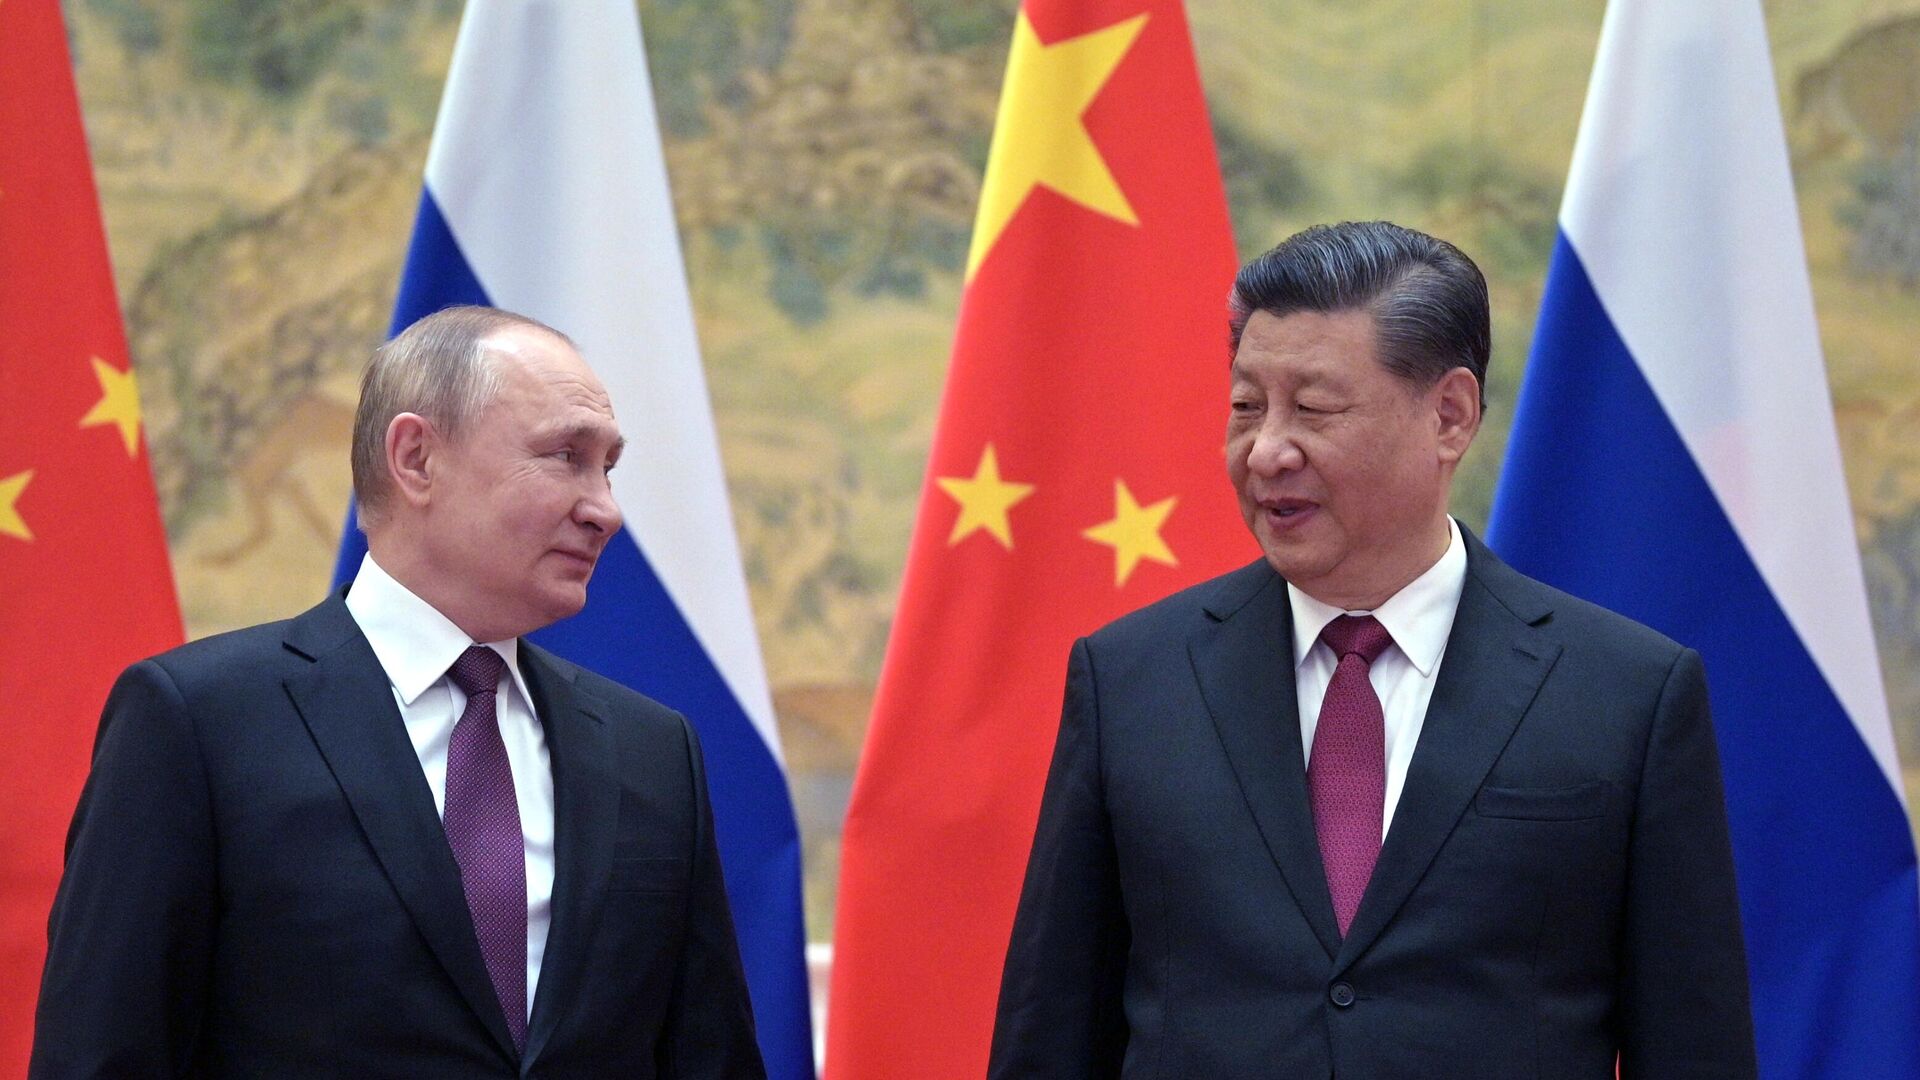 Russian President Vladimir Putin, left, and Chinese President Xi Jinping pose during their meeting at the Diaoyutai State Guesthouse in Beijing, China. - Sputnik International, 1920, 15.09.2022